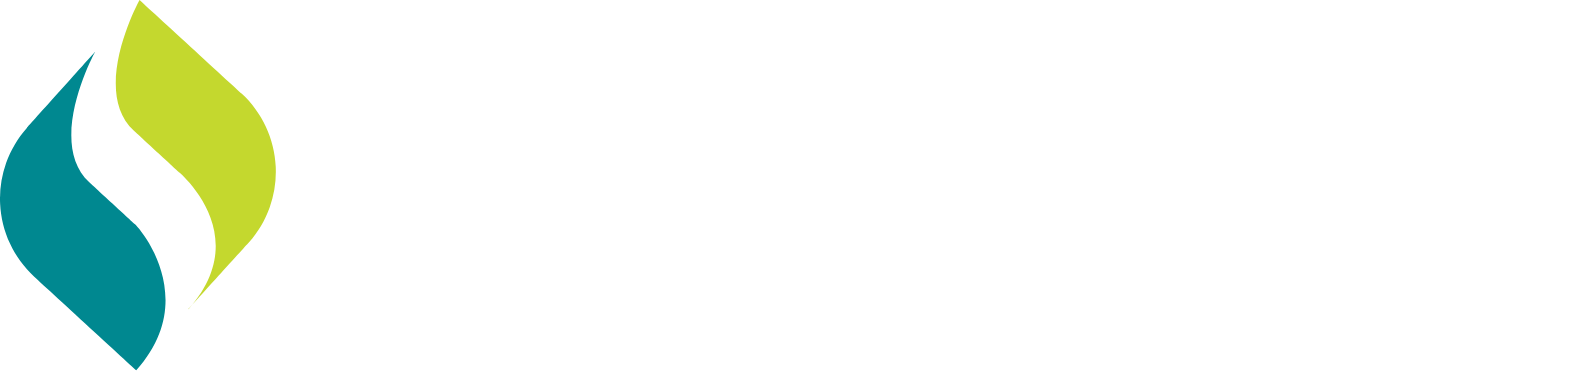 Signify Health Logo groß für dunkle Hintergründe (transparentes PNG)